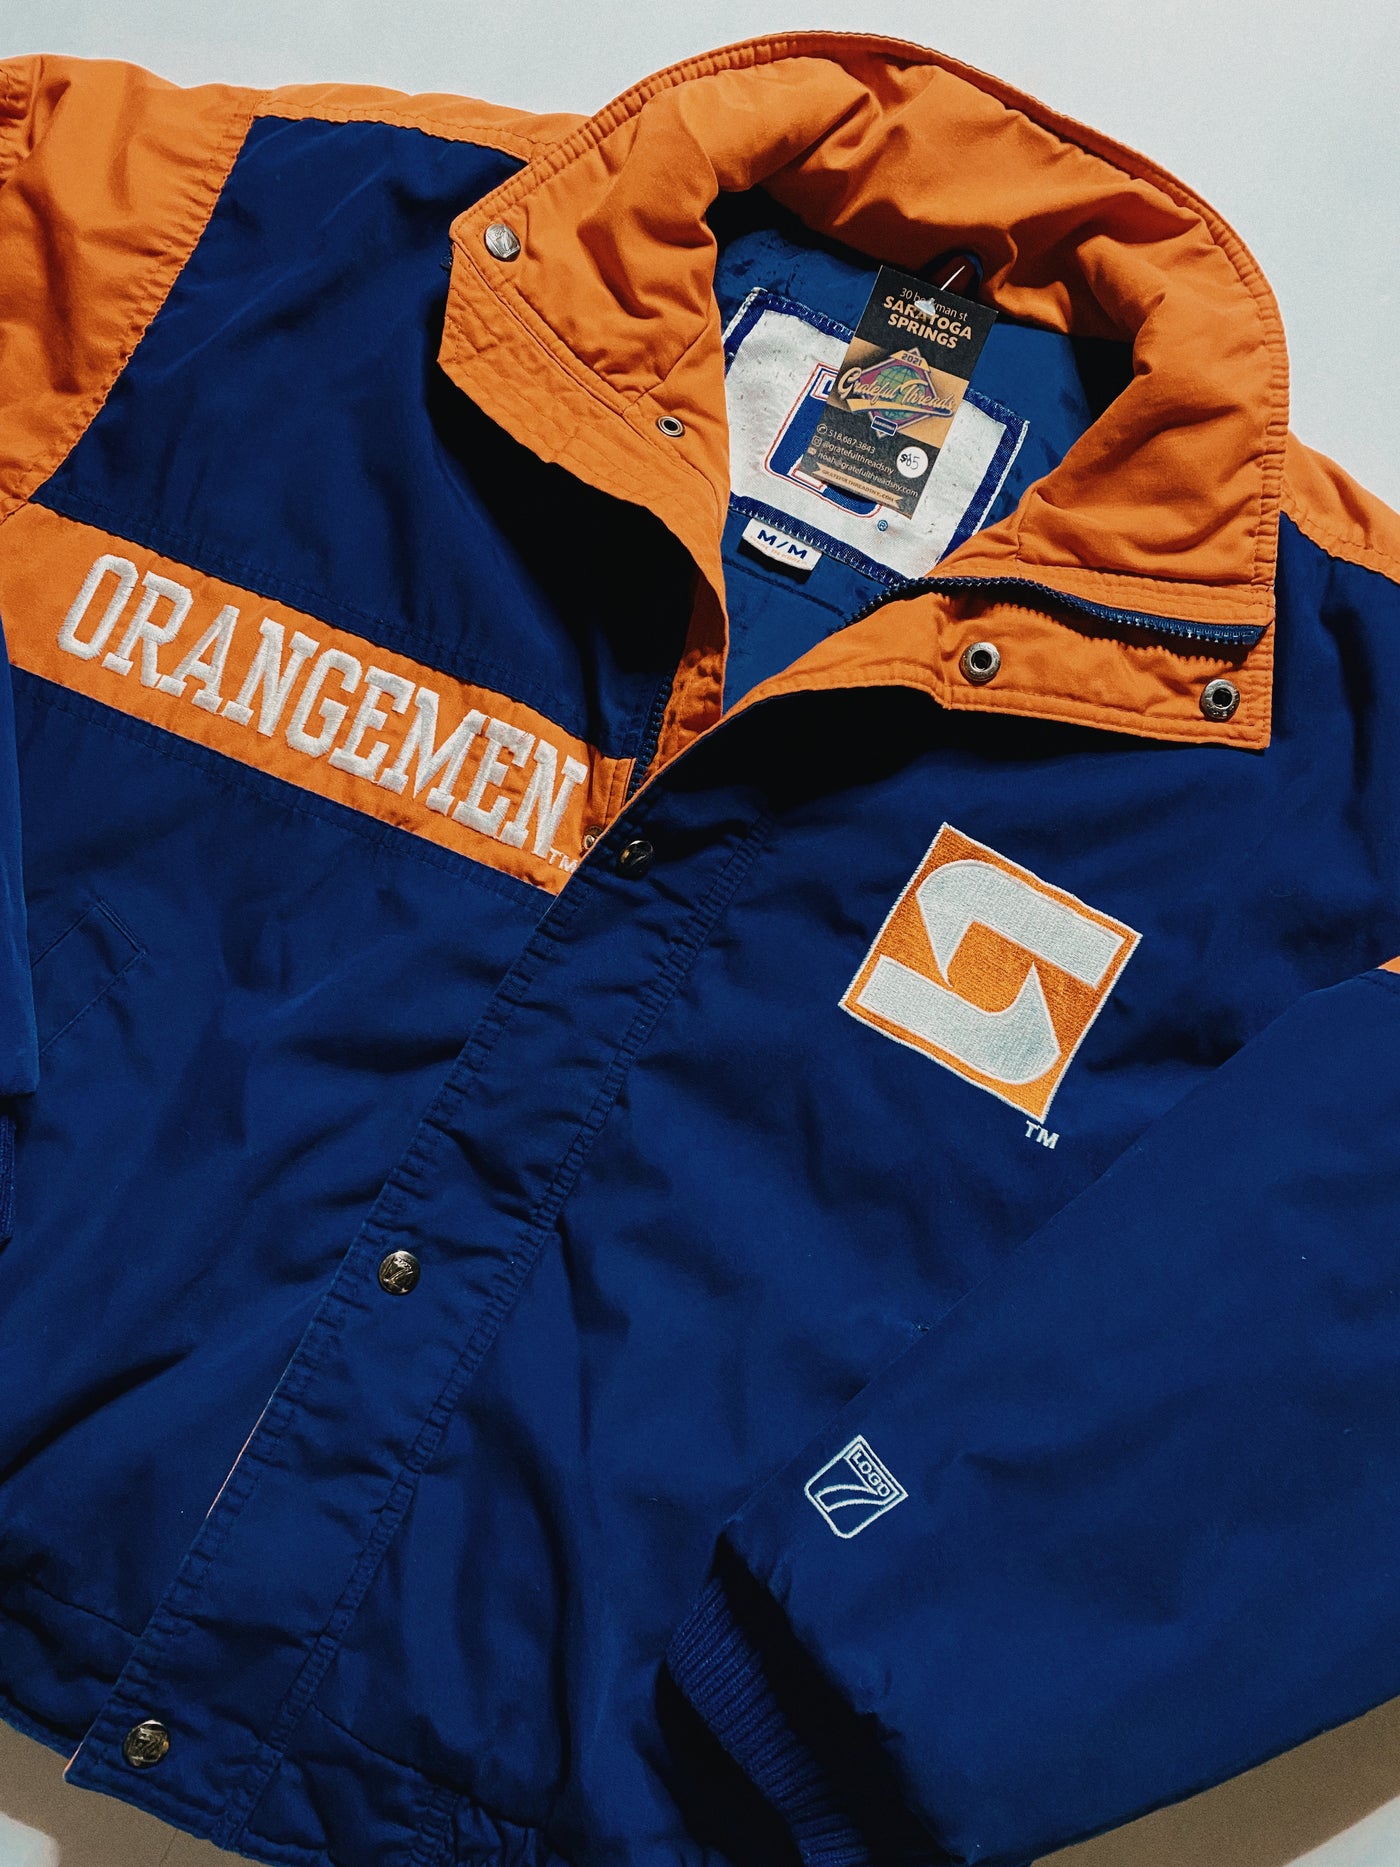 Vintage Syracuse Orangemen Big Logo Puffer Jacket